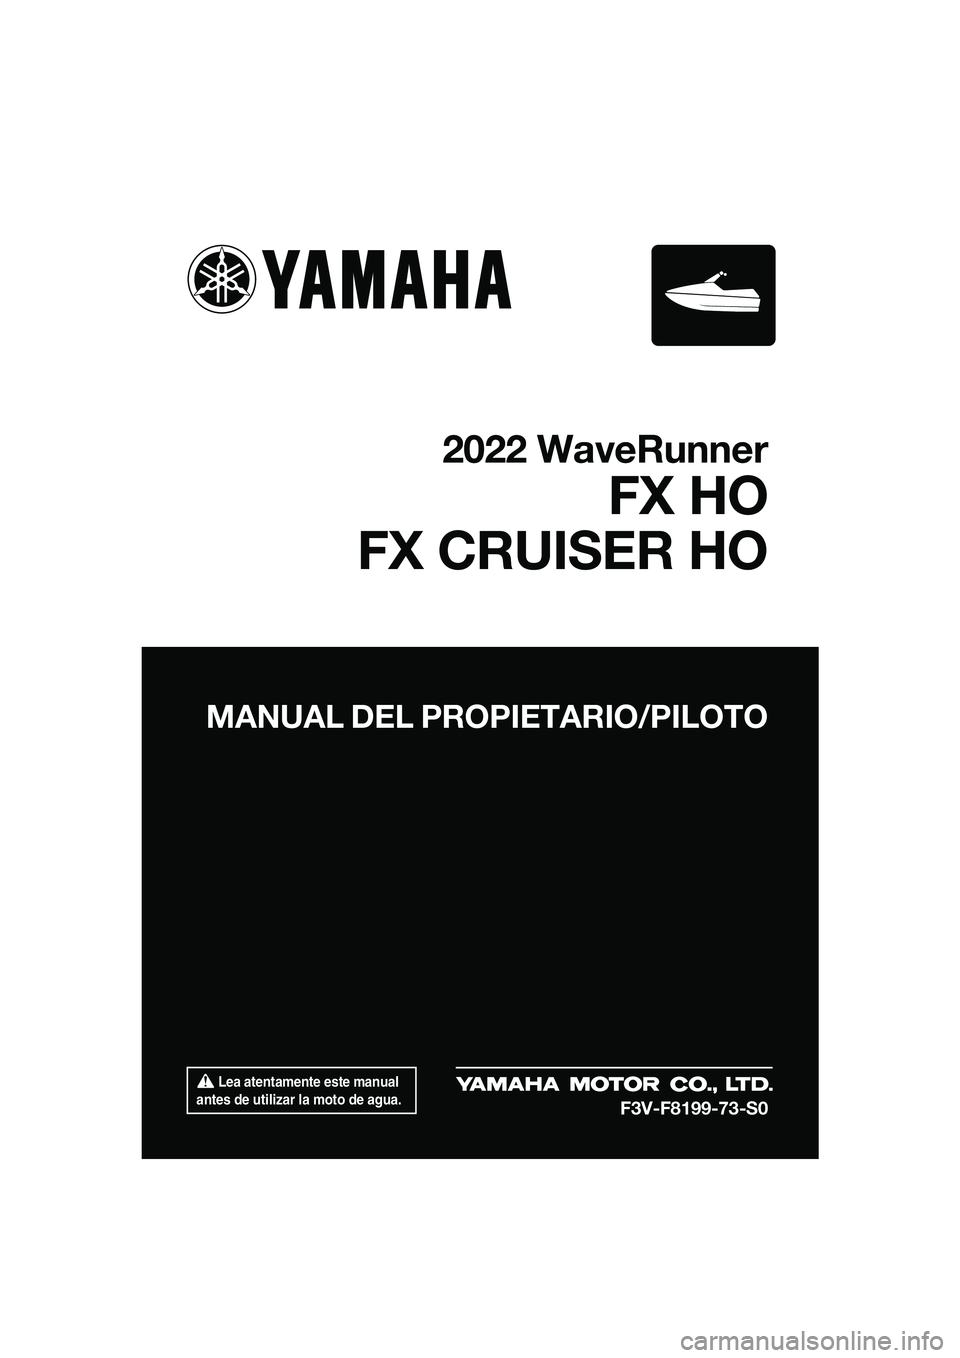 YAMAHA FX HO CRUISER 2022  Manuale de Empleo (in Spanish) 